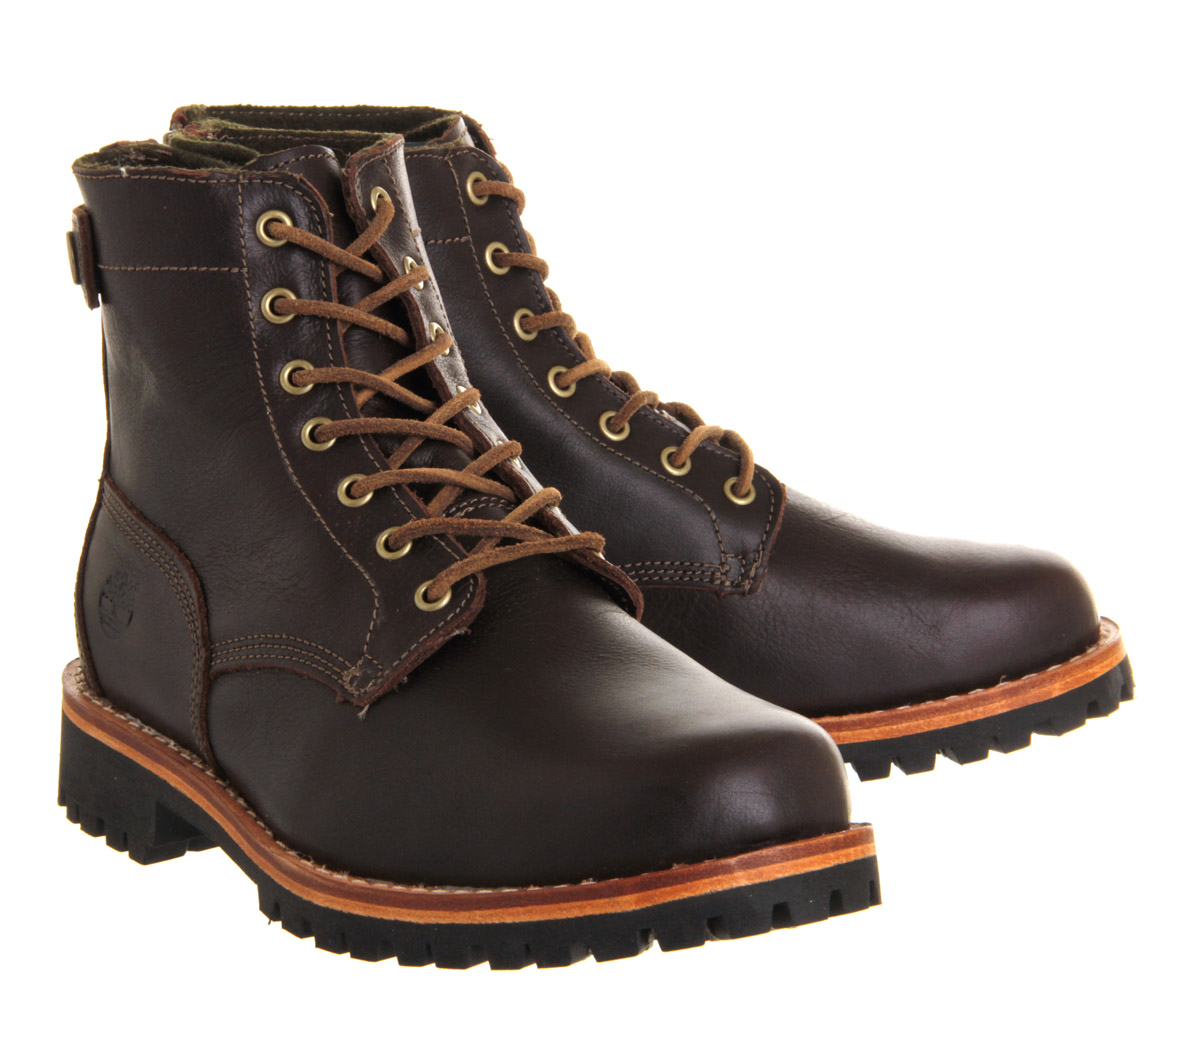 Timberland Heritage Ltd Back Zip Boot in Brown for Men - Lyst